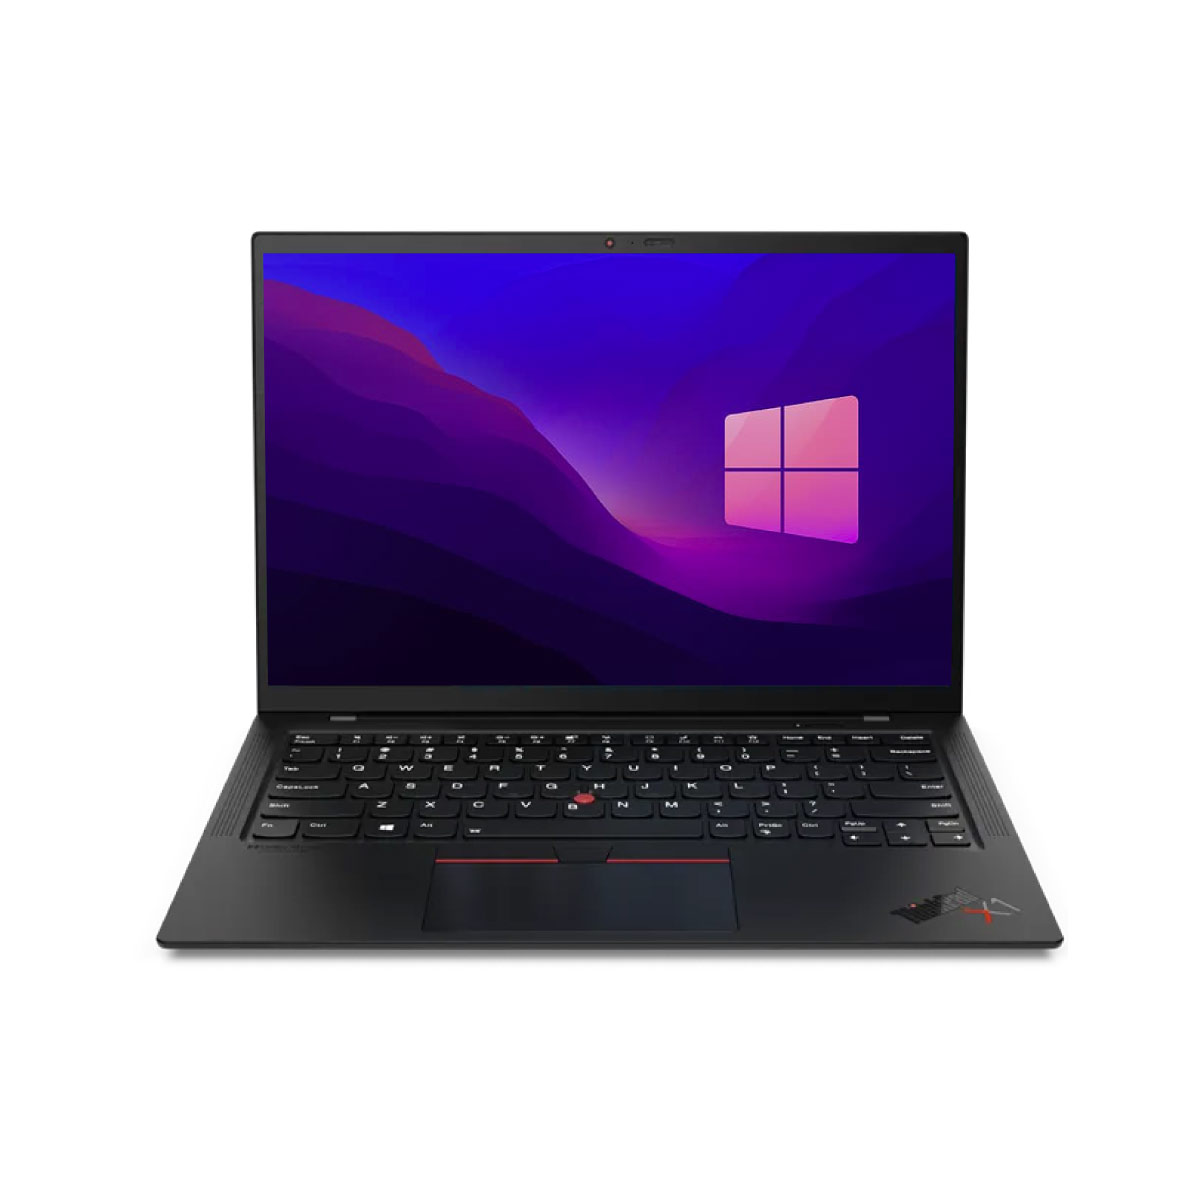 Lenovo X1 Carbon G9 Ultrabook Notebook, Intel Core i7-1185G7 CPU, 16GB RAM, 512GB SSD, 14